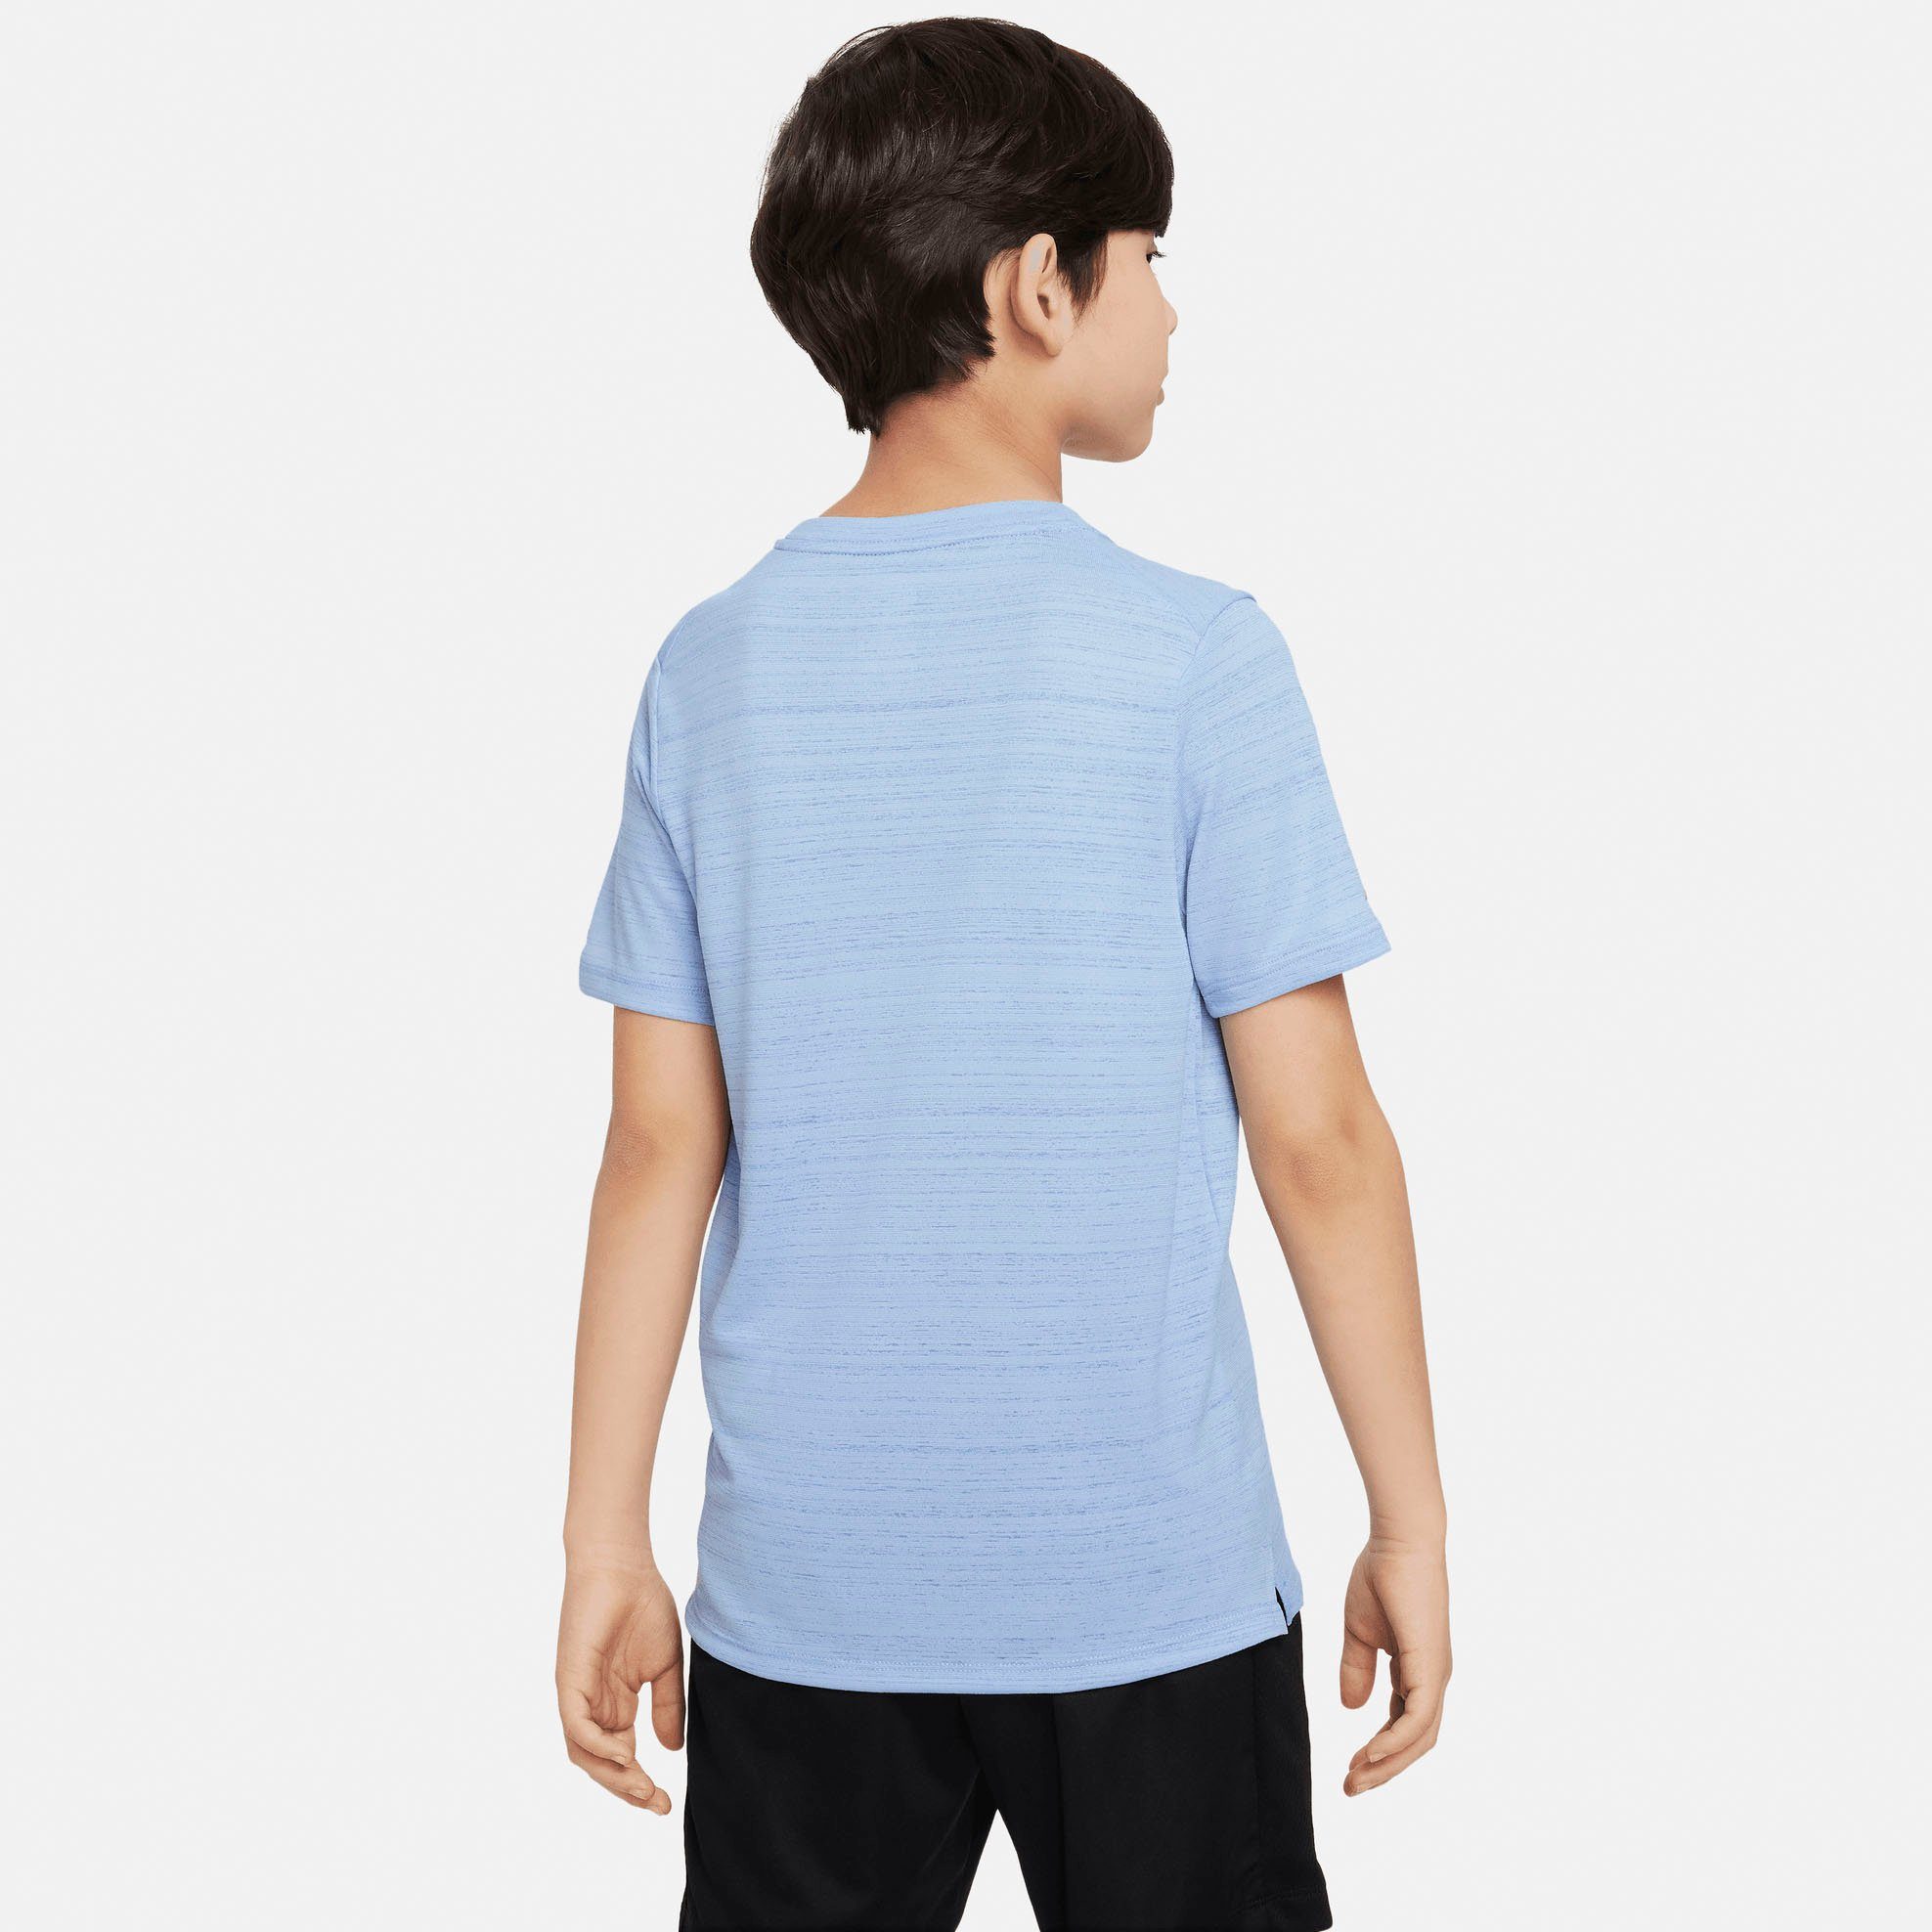 Big Miler Trainingsshirt Top blau Nike Dri-FIT (Boys) Training Kids'